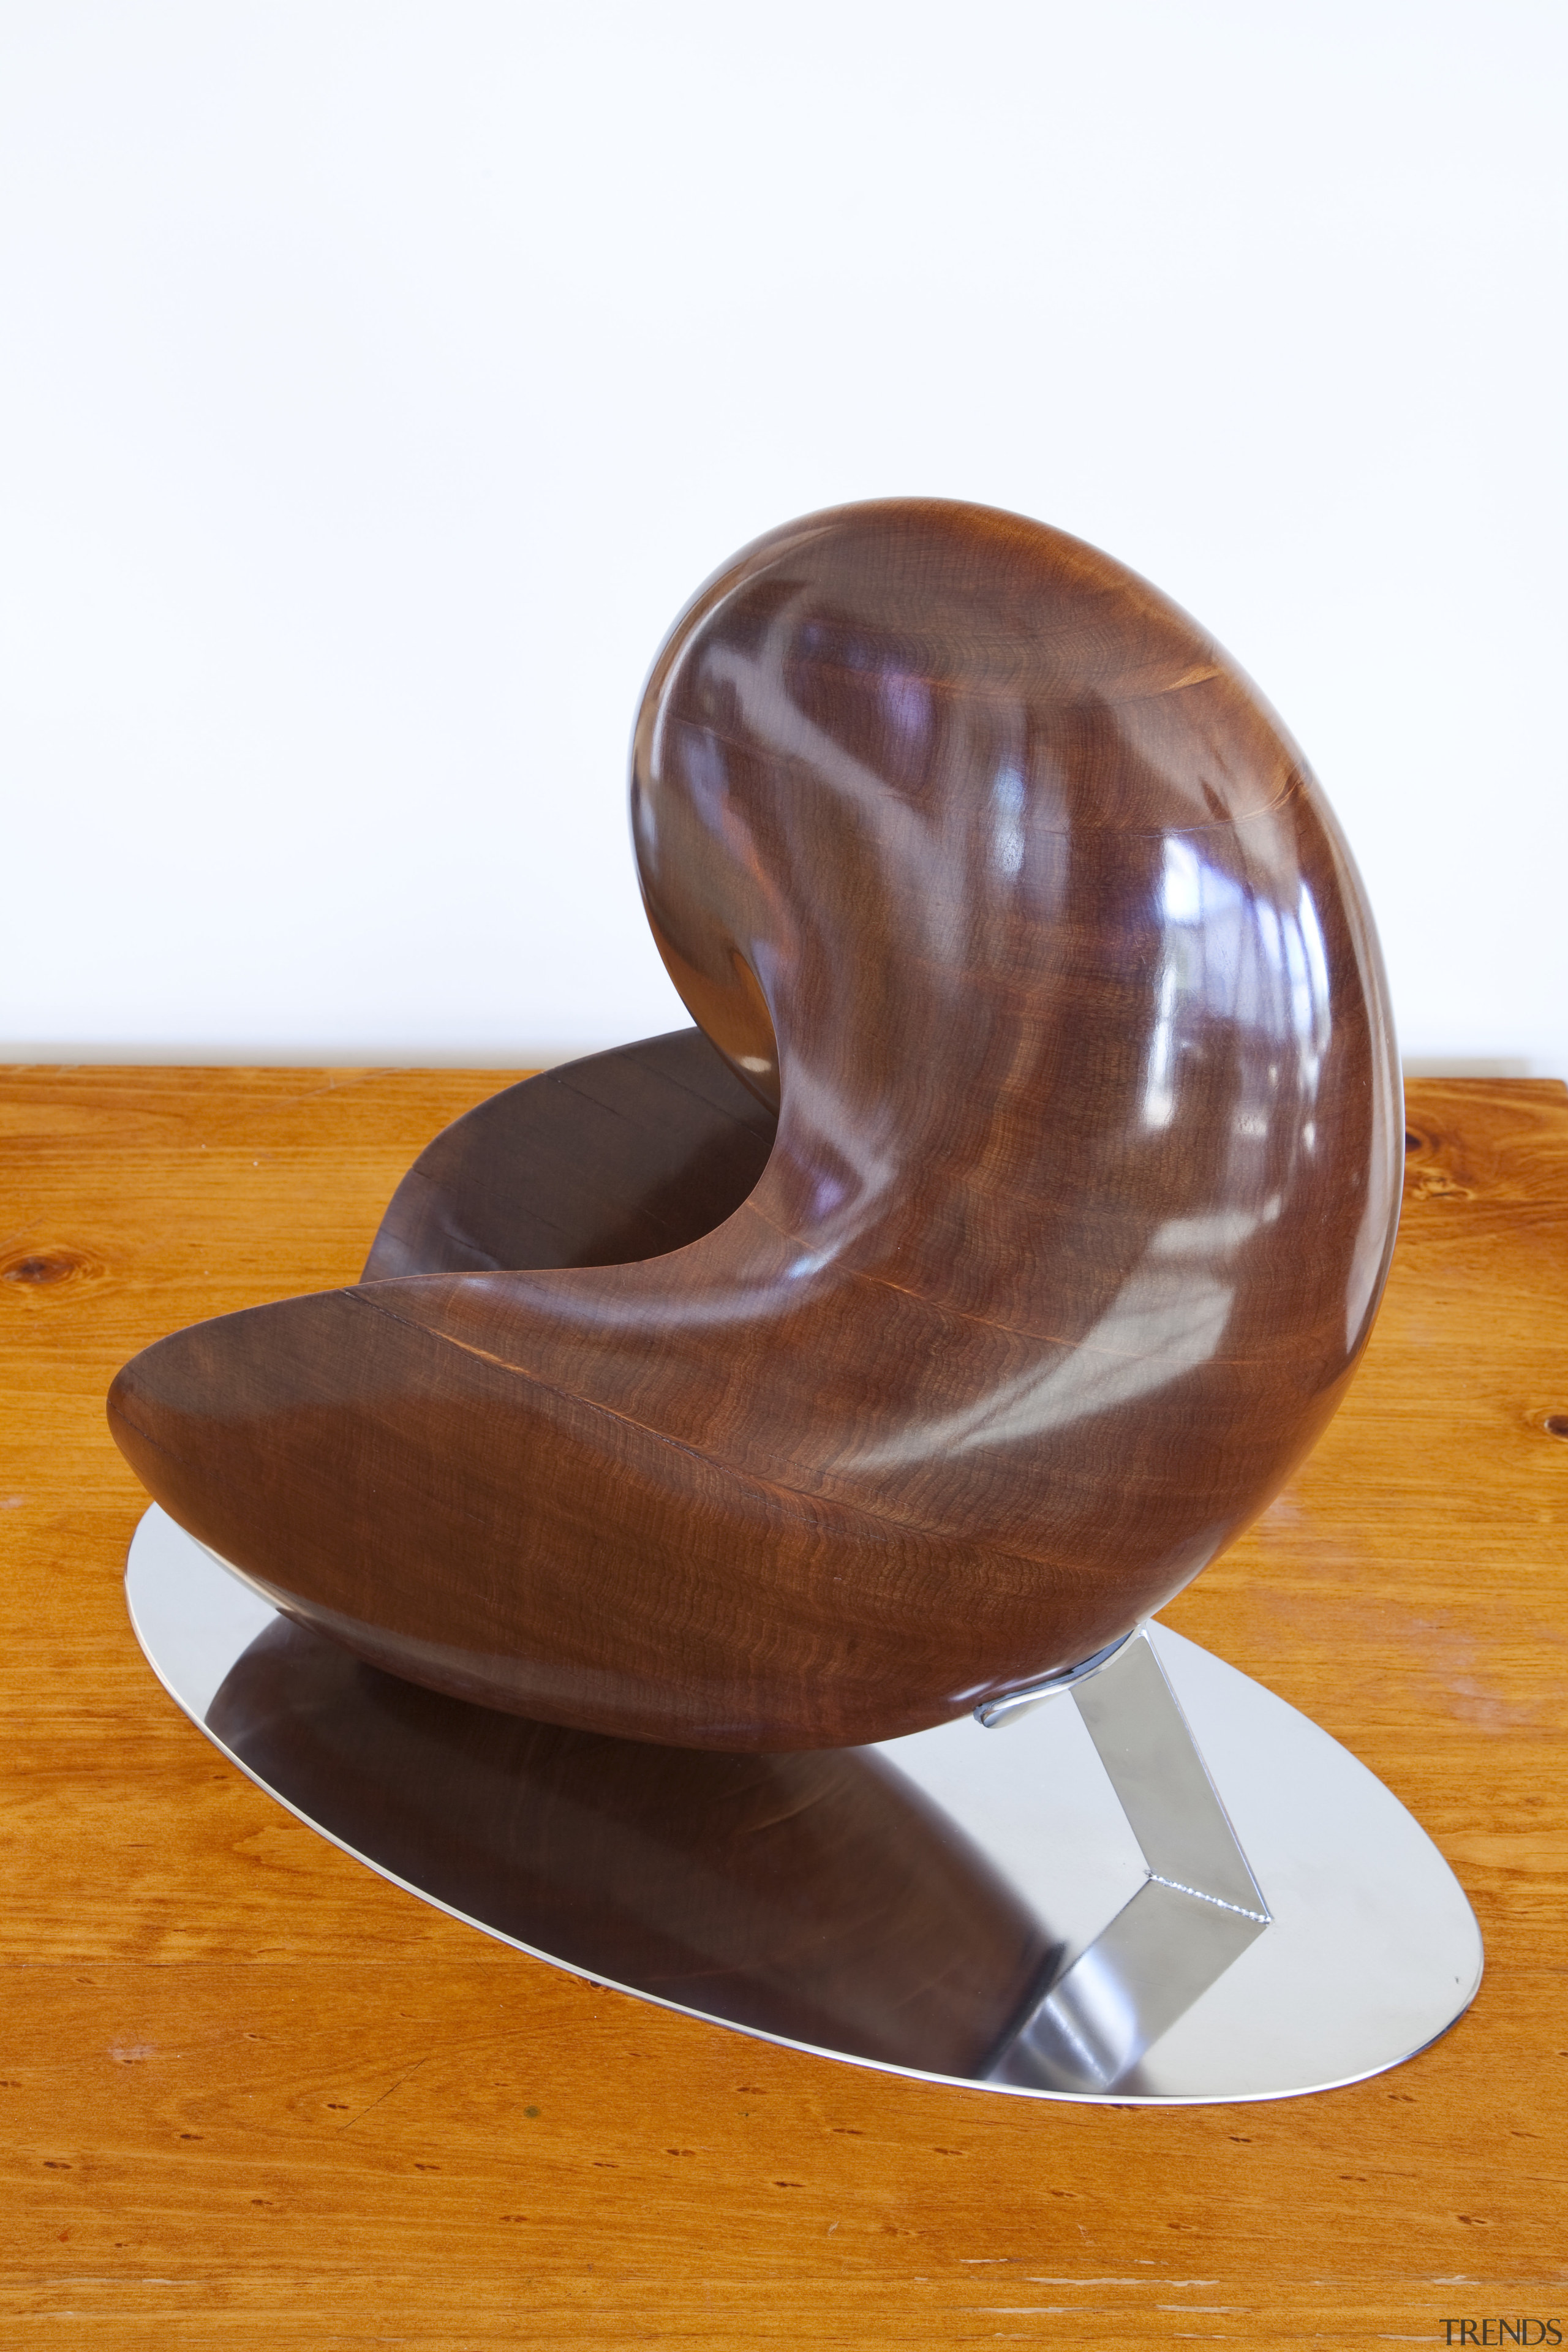 Andrew Deadman's sculpture, he won Trends Sculptor of chair, furniture, product design, white, orange